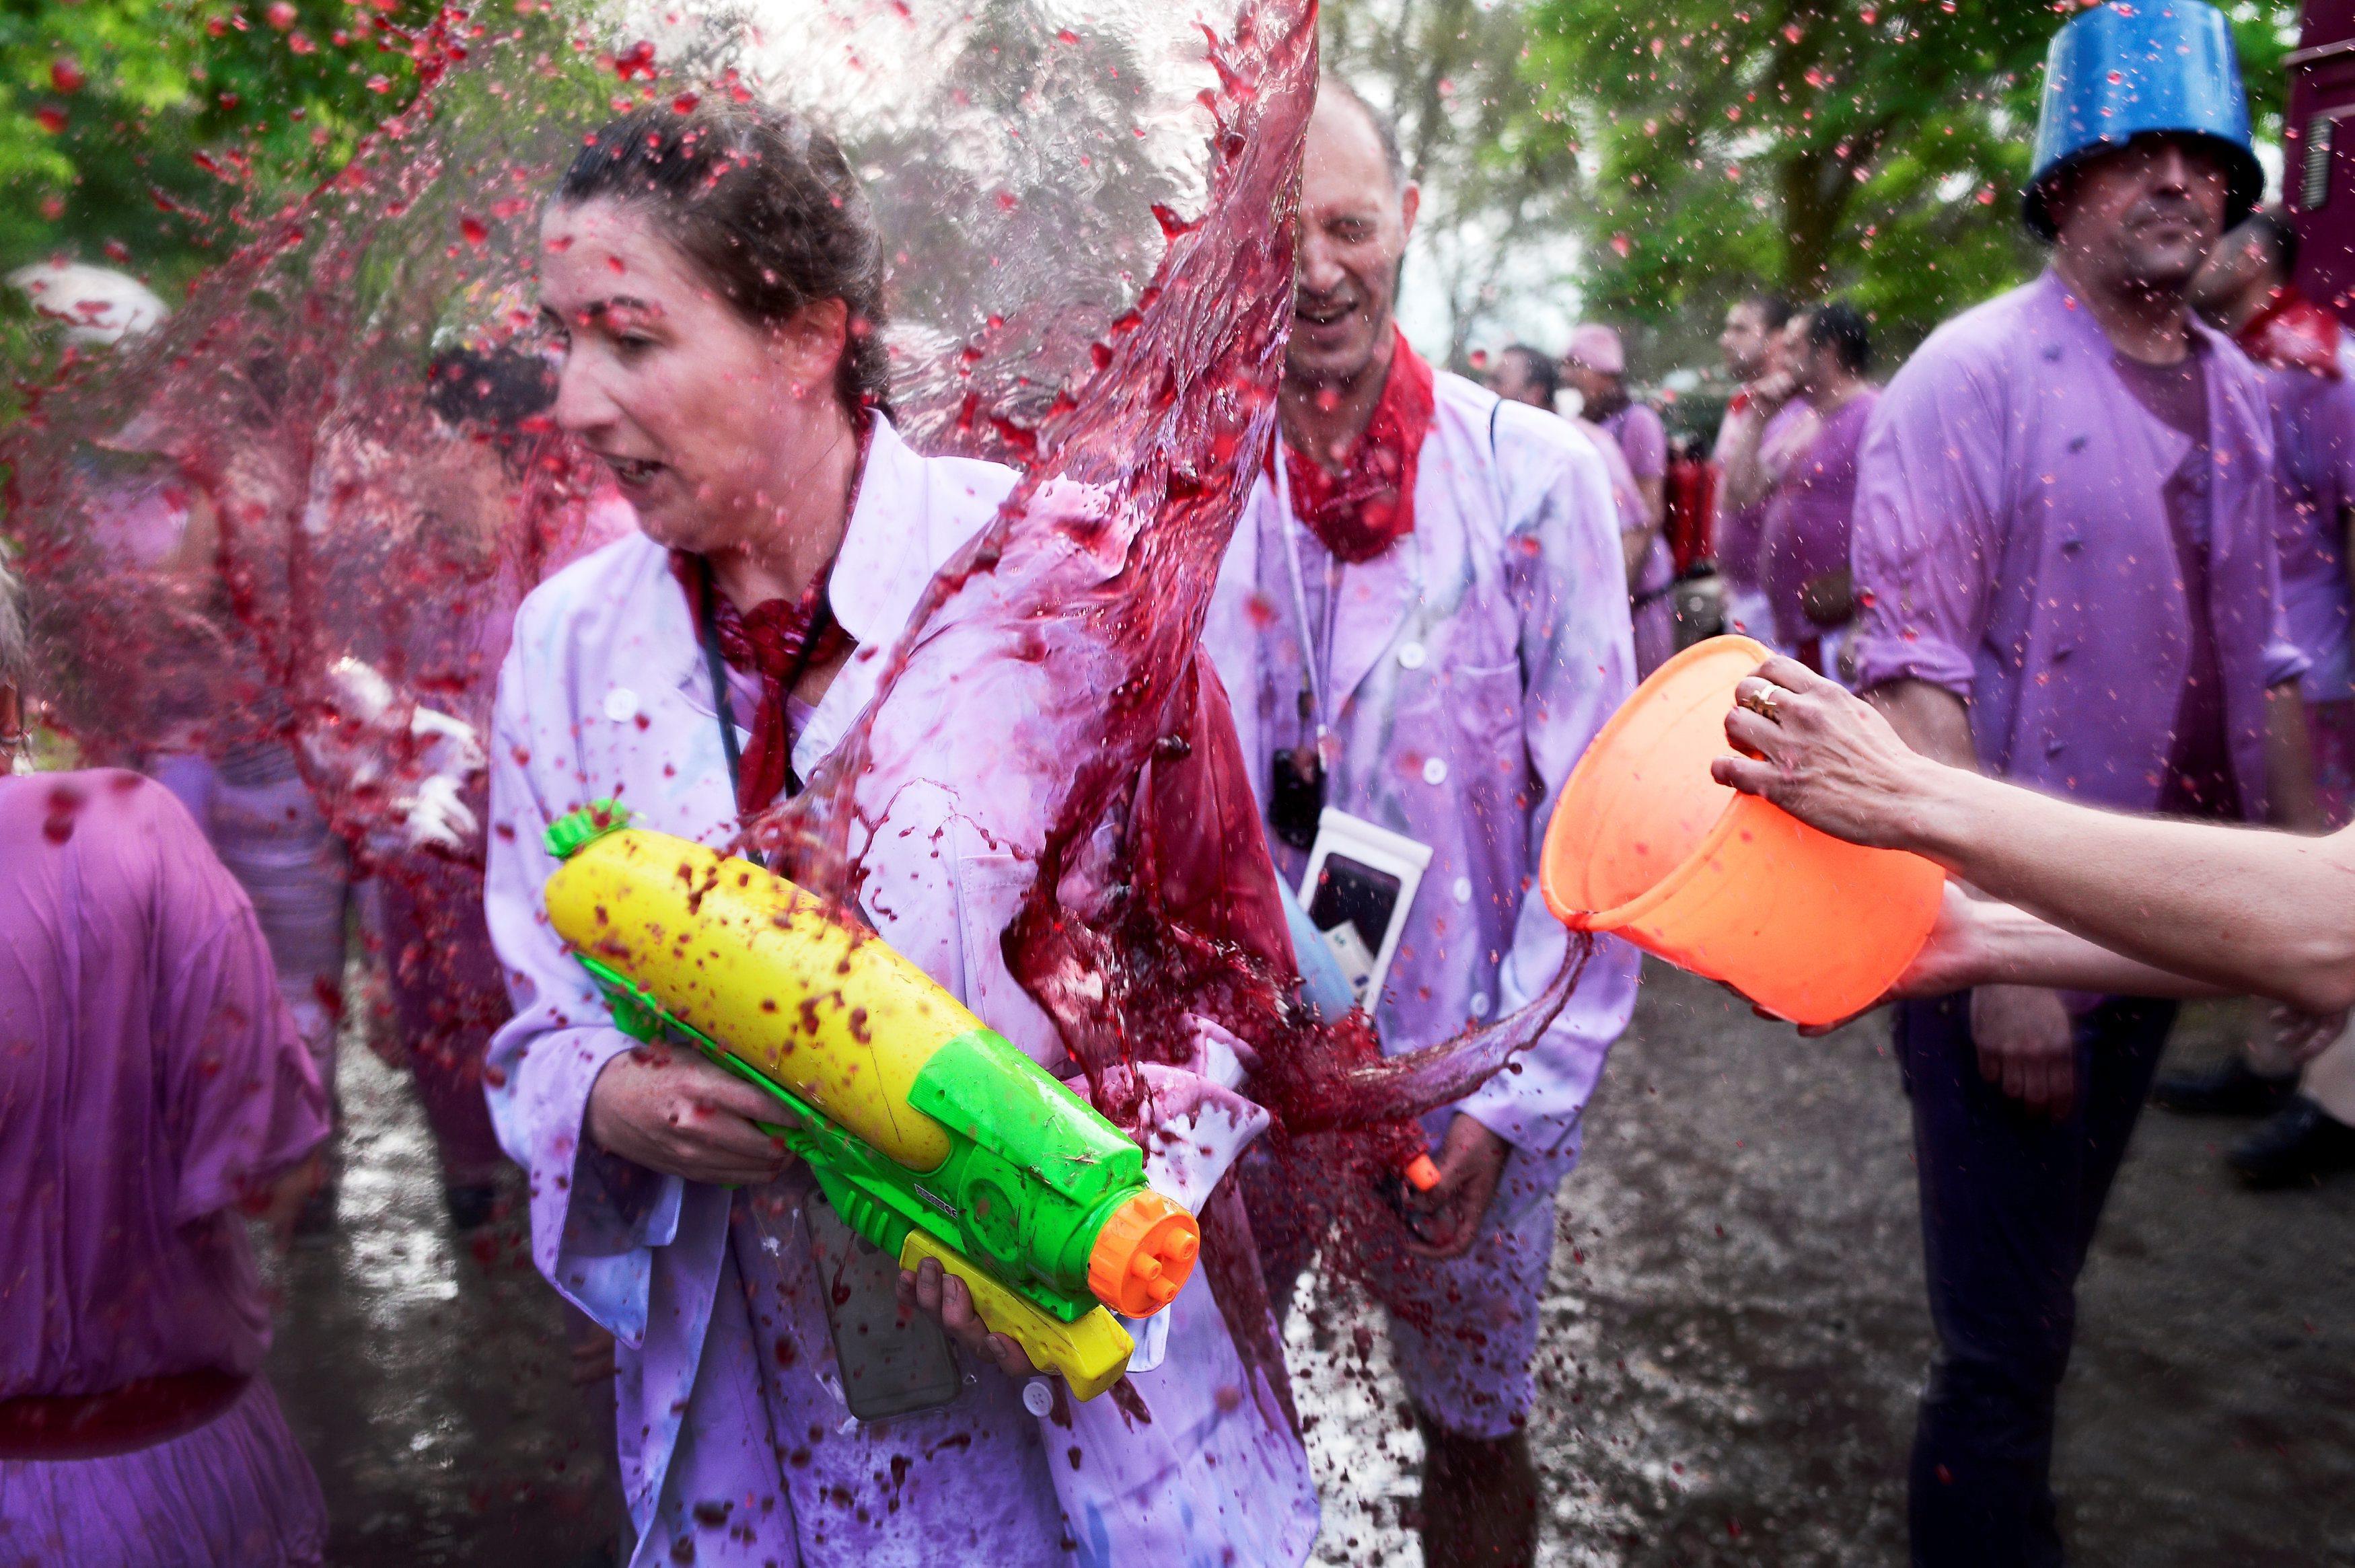 A reveller has wine thrown at her during the Batalla de Vino (Wine Battle) in Haro